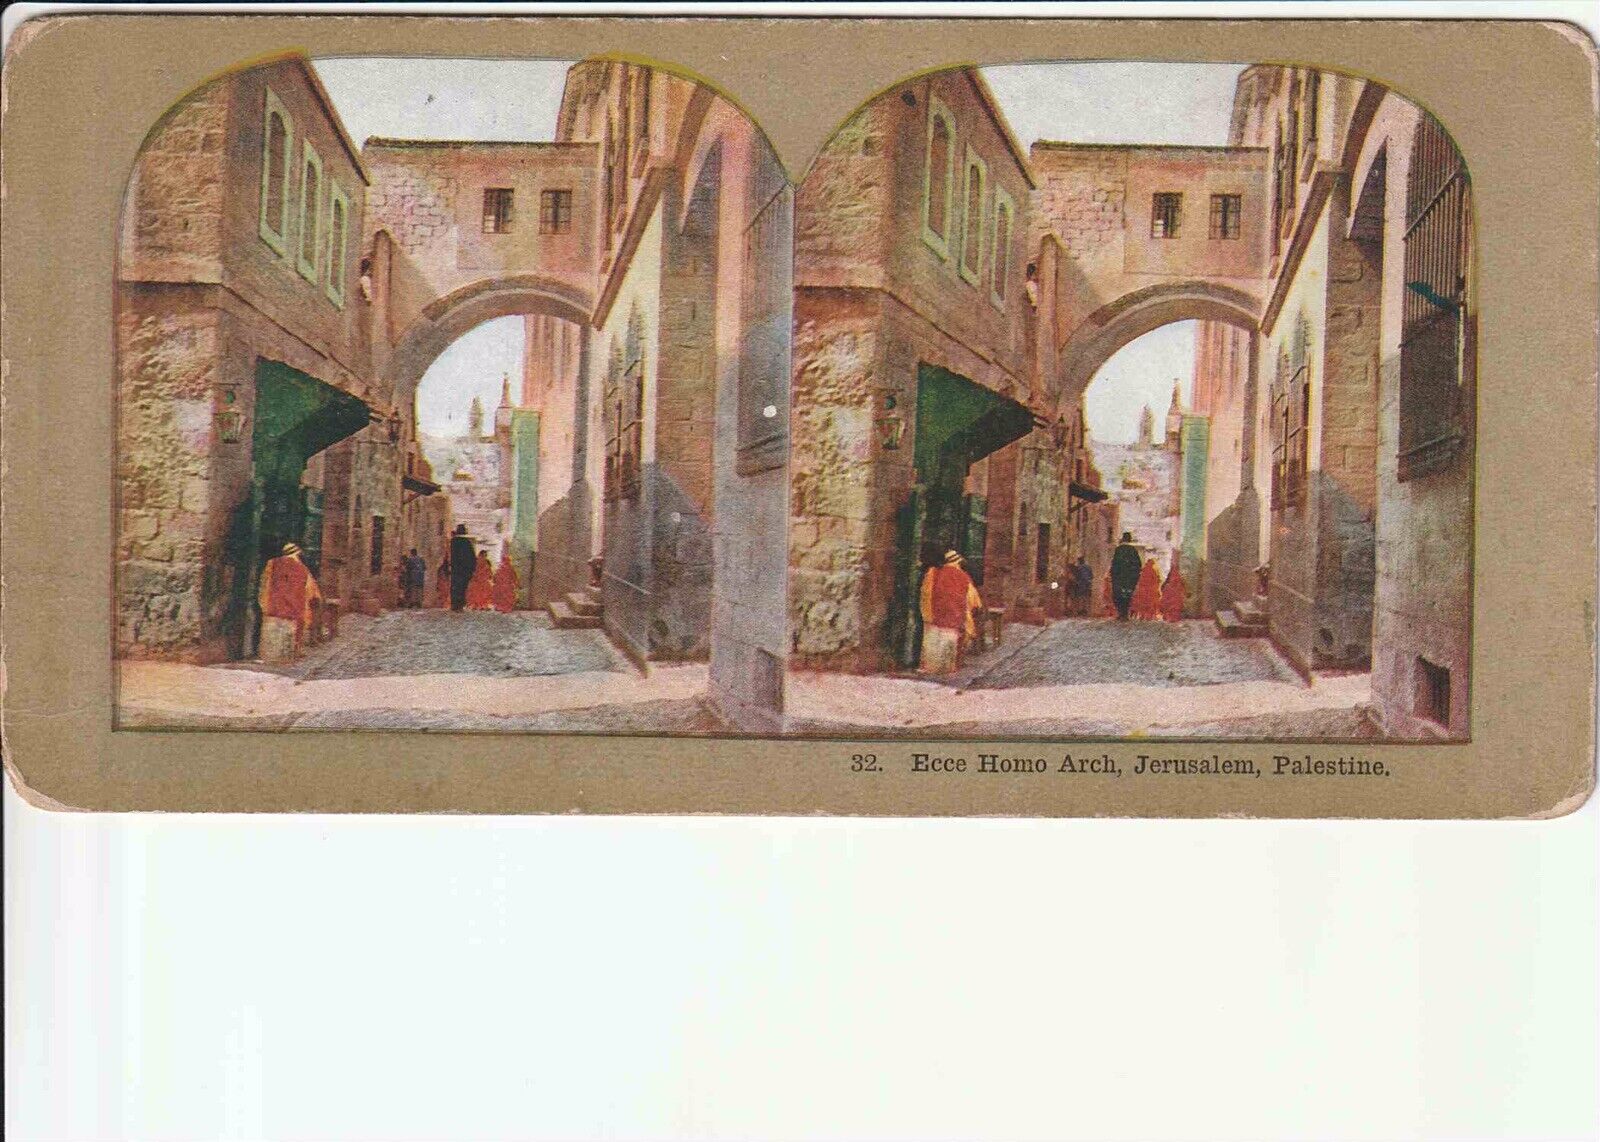 Eccentric Homo Arch, Jerusalem, Palestine Stereoscope Viewer Card, 1800s-1900s